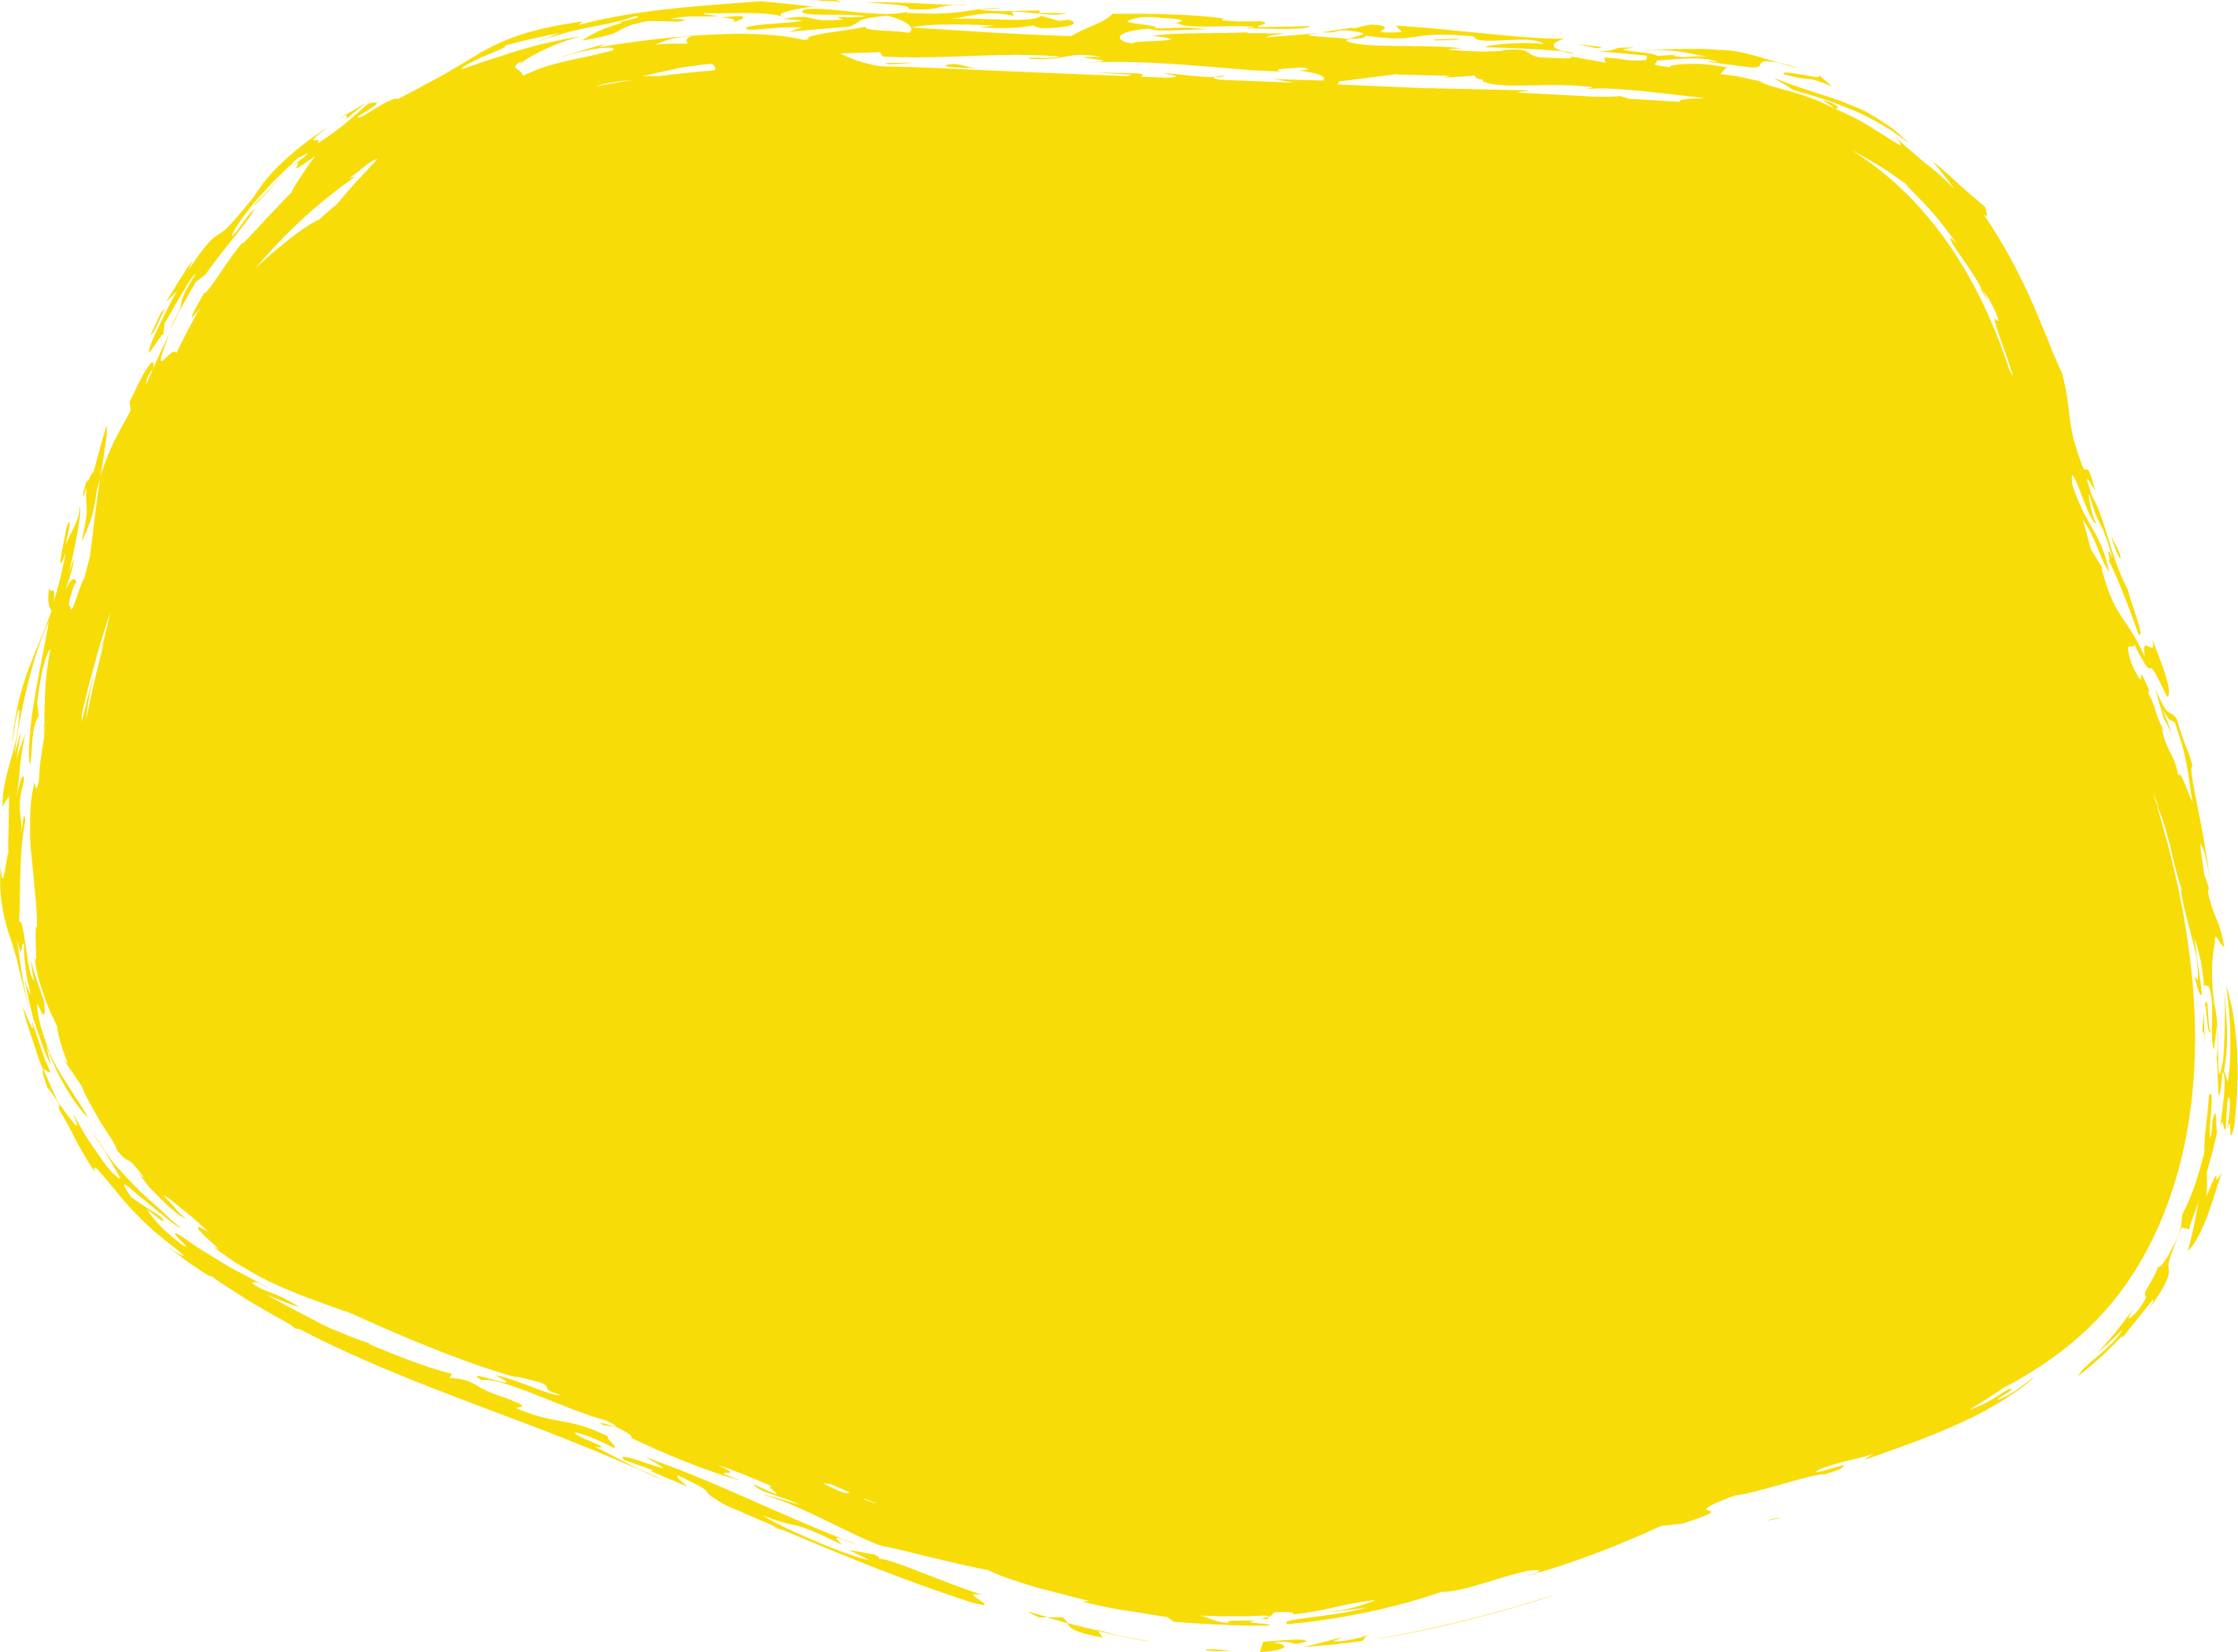 Forme arrondie jaune